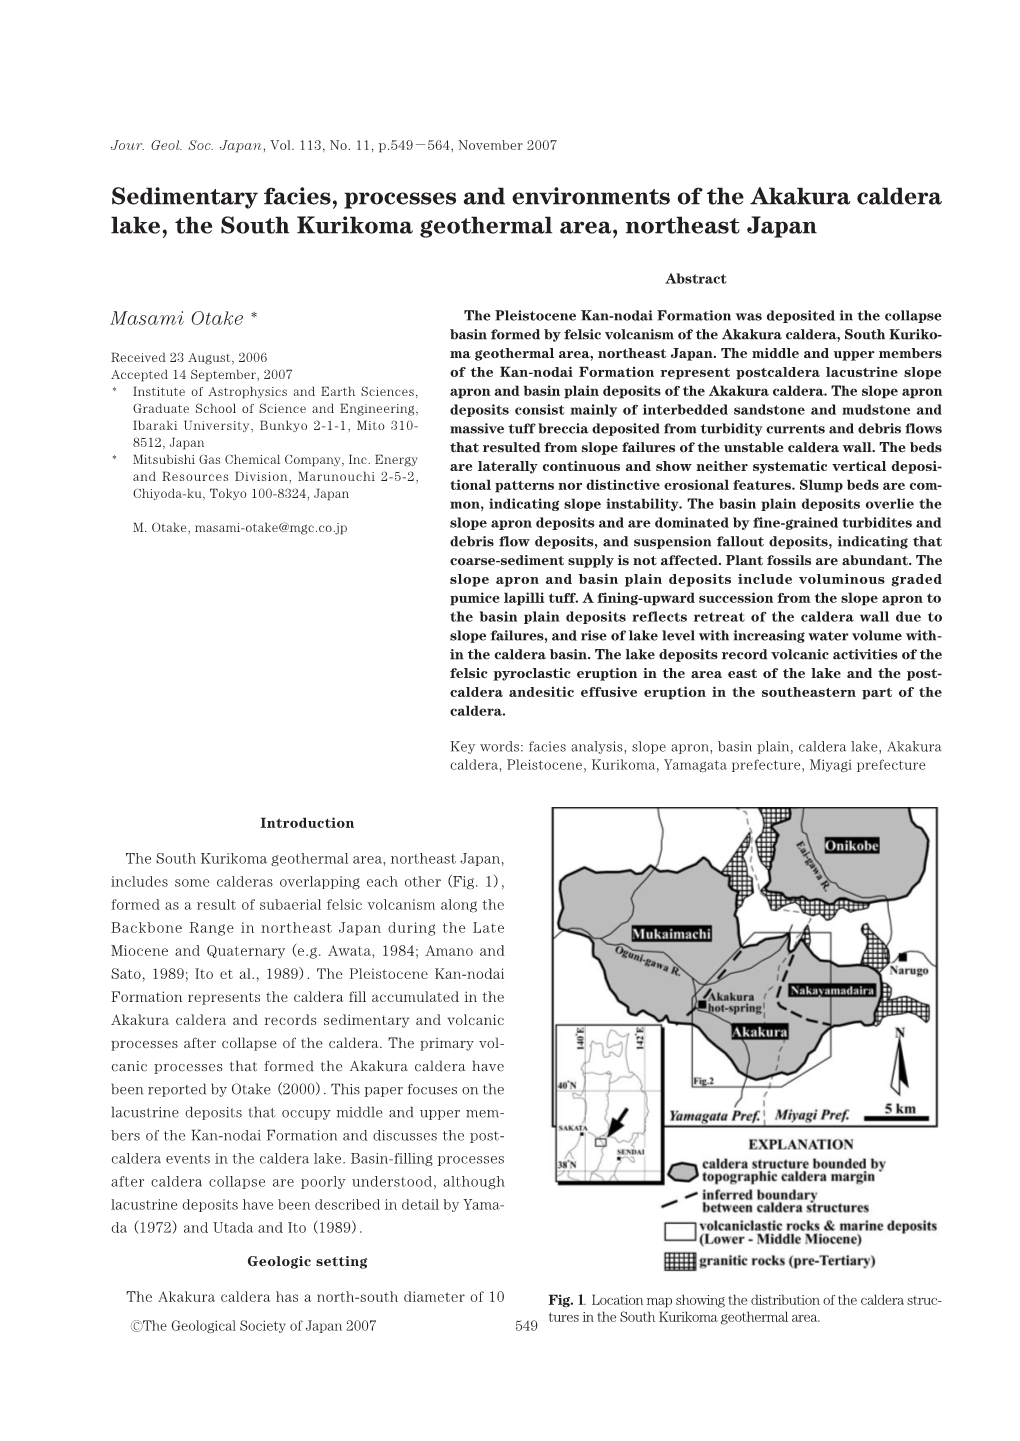 Sedimentary Facies, Processes and Environments of the Akakura Caldera Lake, the South Kurikoma Geothermal Area, Northeast Japan